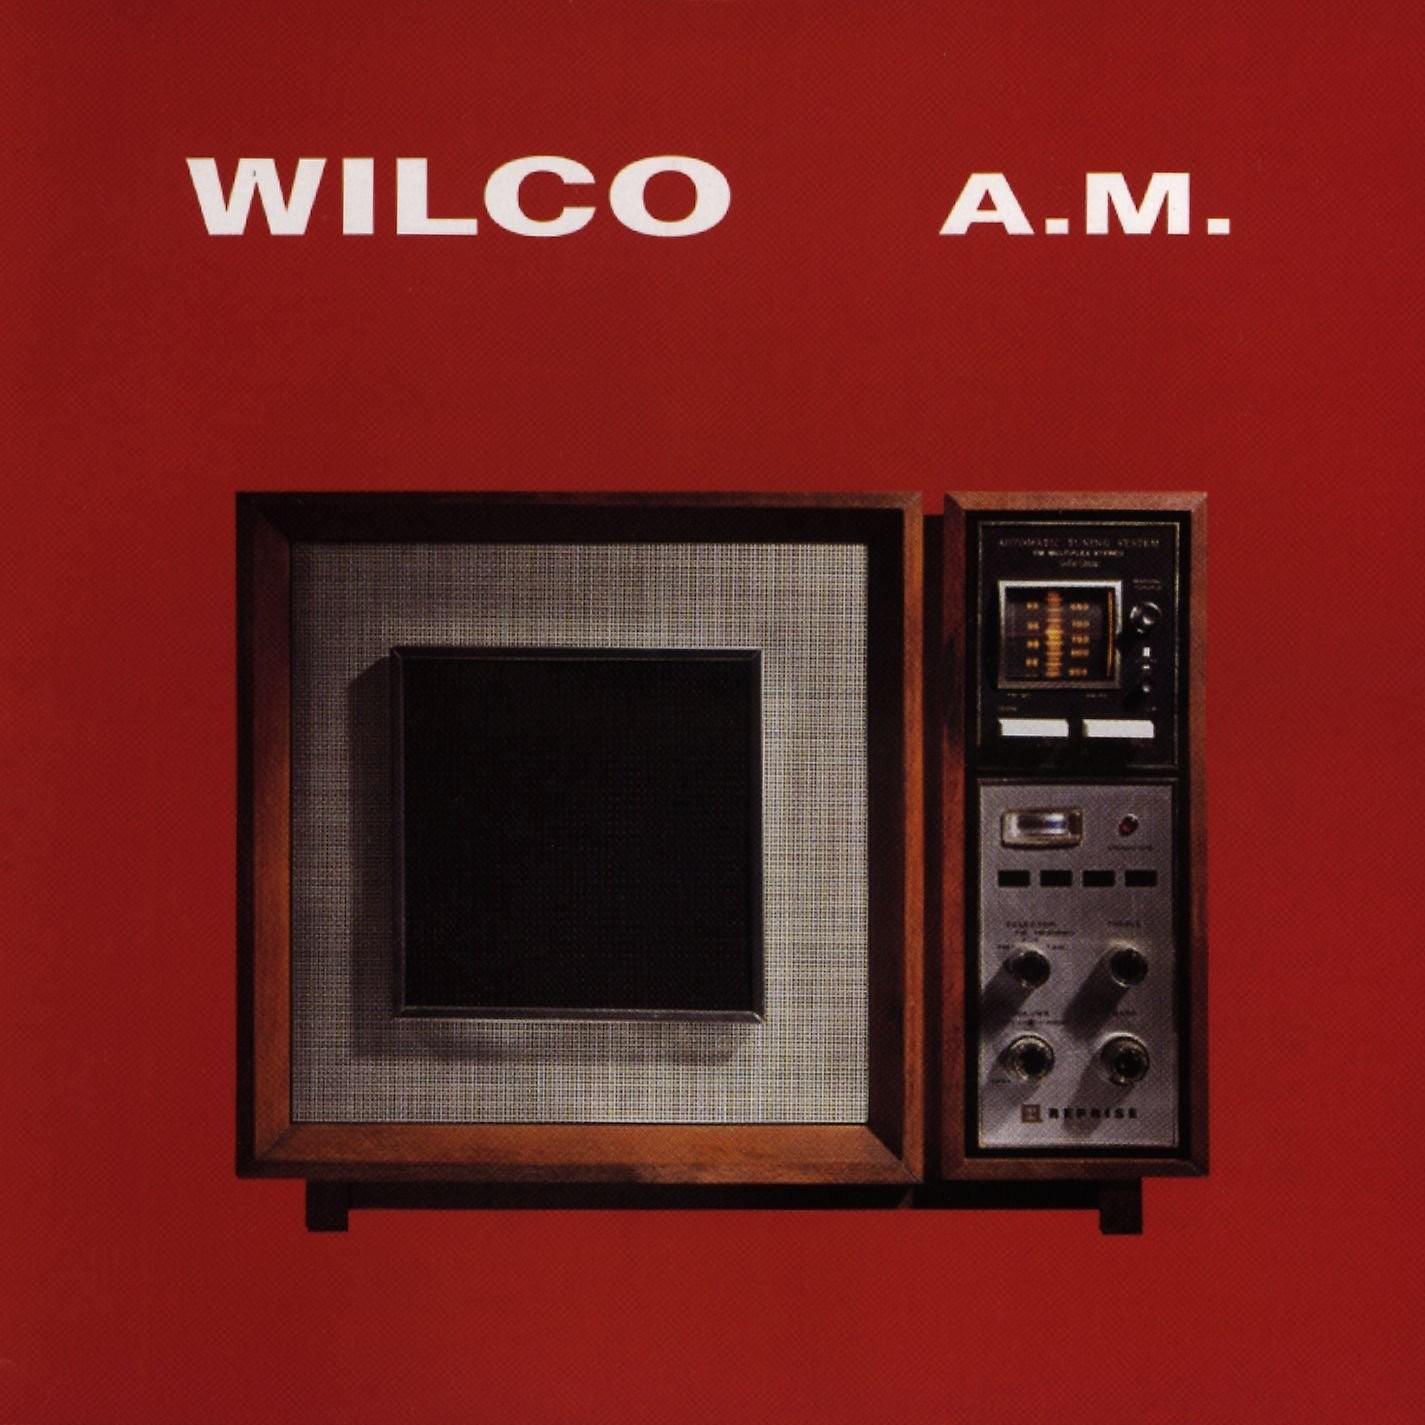 Wilco - A.M. (Deluxe) 2XLP Vinyl